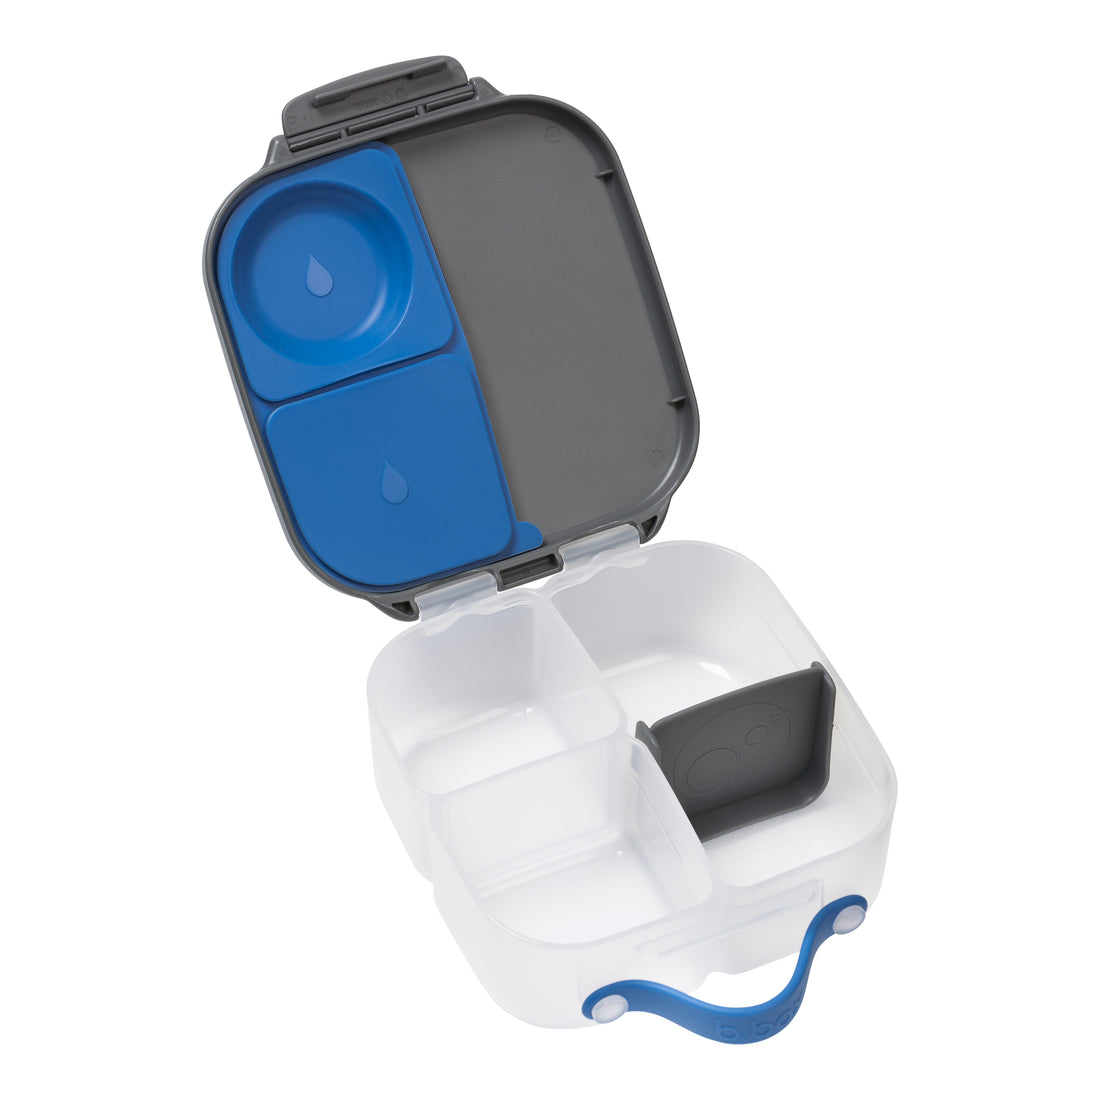 BBox Lonchera Mini Lunchbox Blue Slate